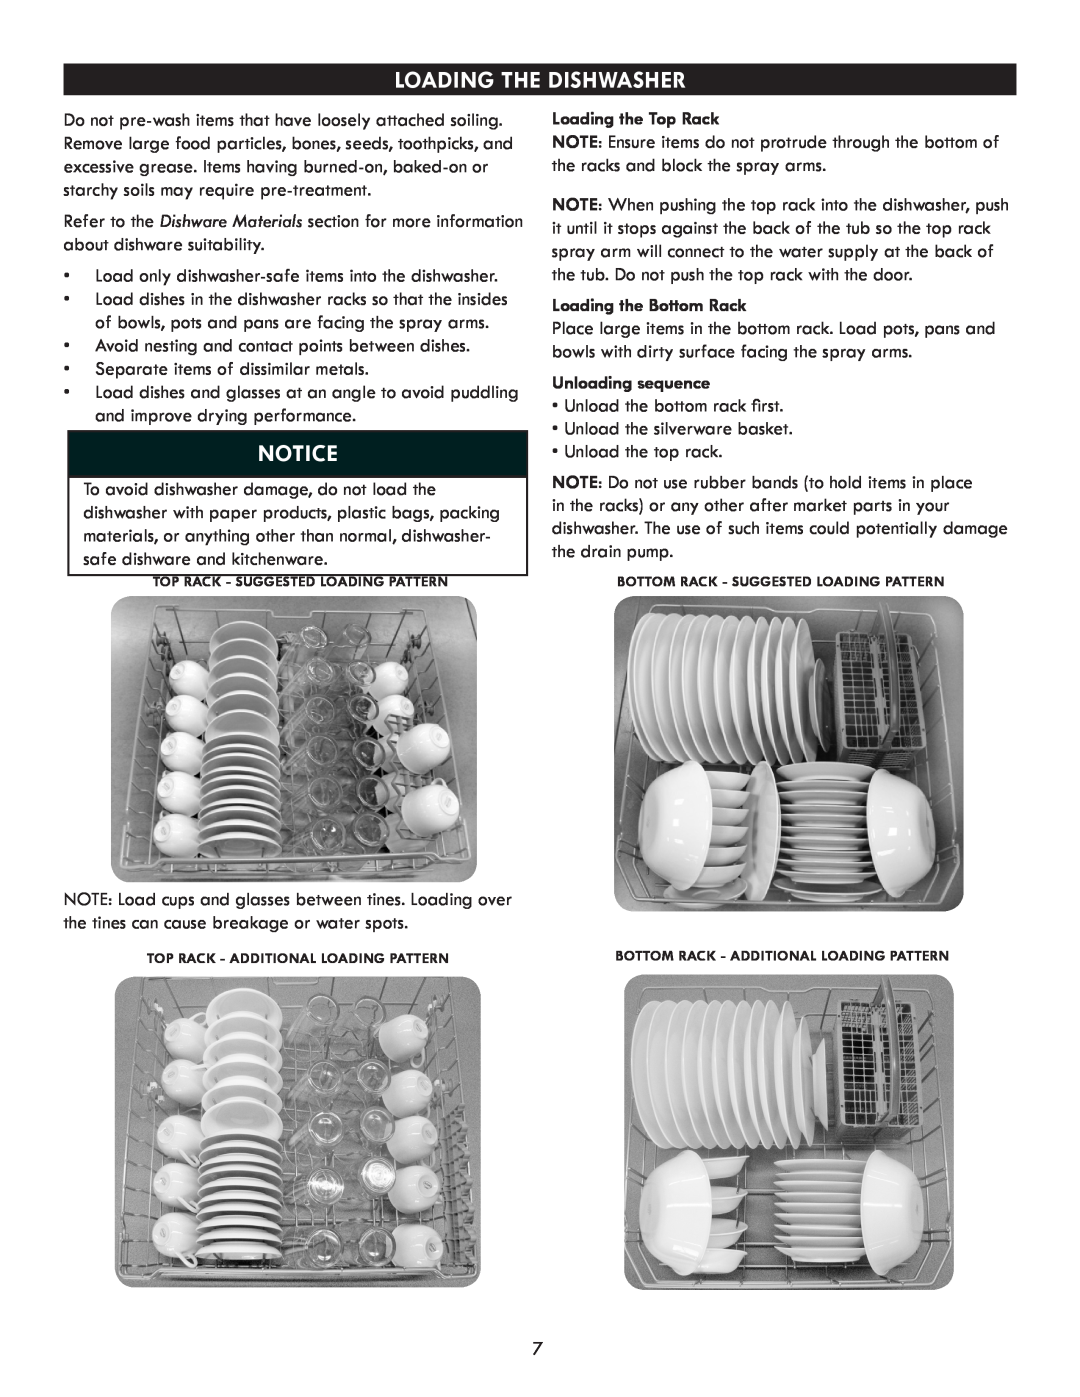 Kenmore 630.7793 manual Loading The Dishwasher, Loading the Top Rack, Loading the Bottom Rack, Unloading sequence 